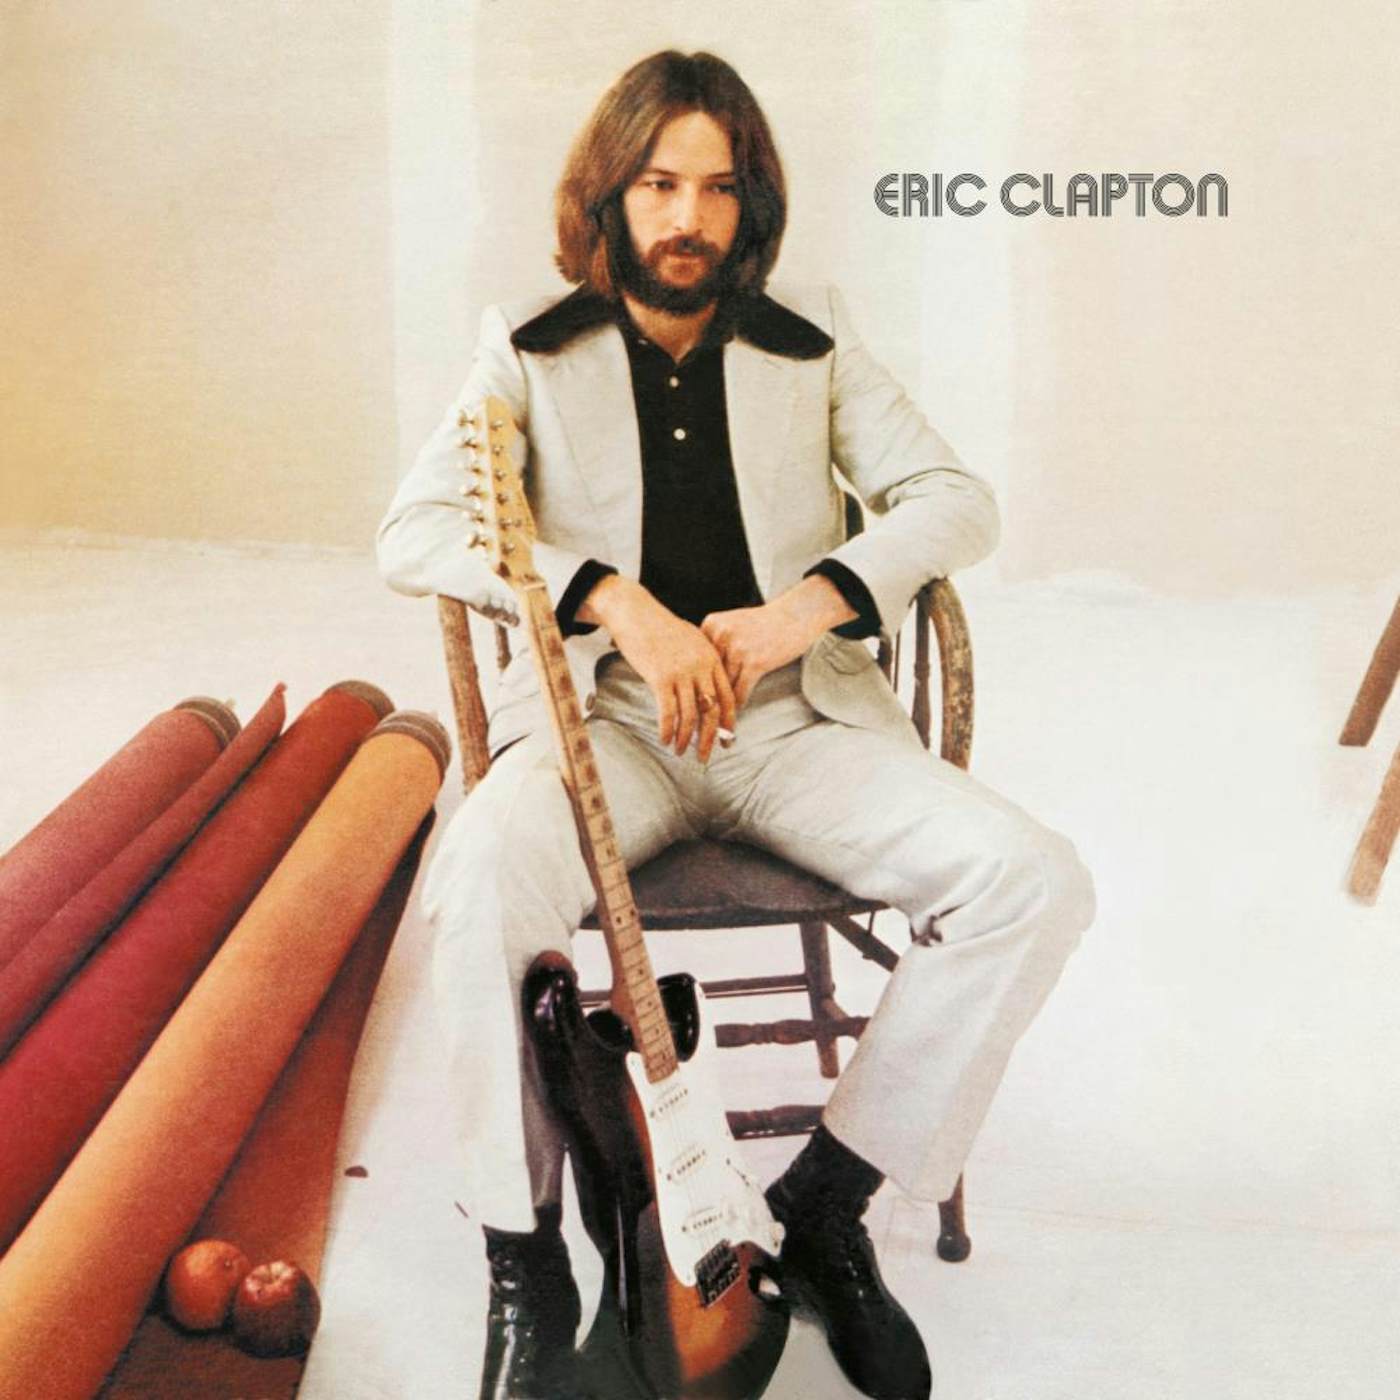 Eric Clapton Vinyl Record